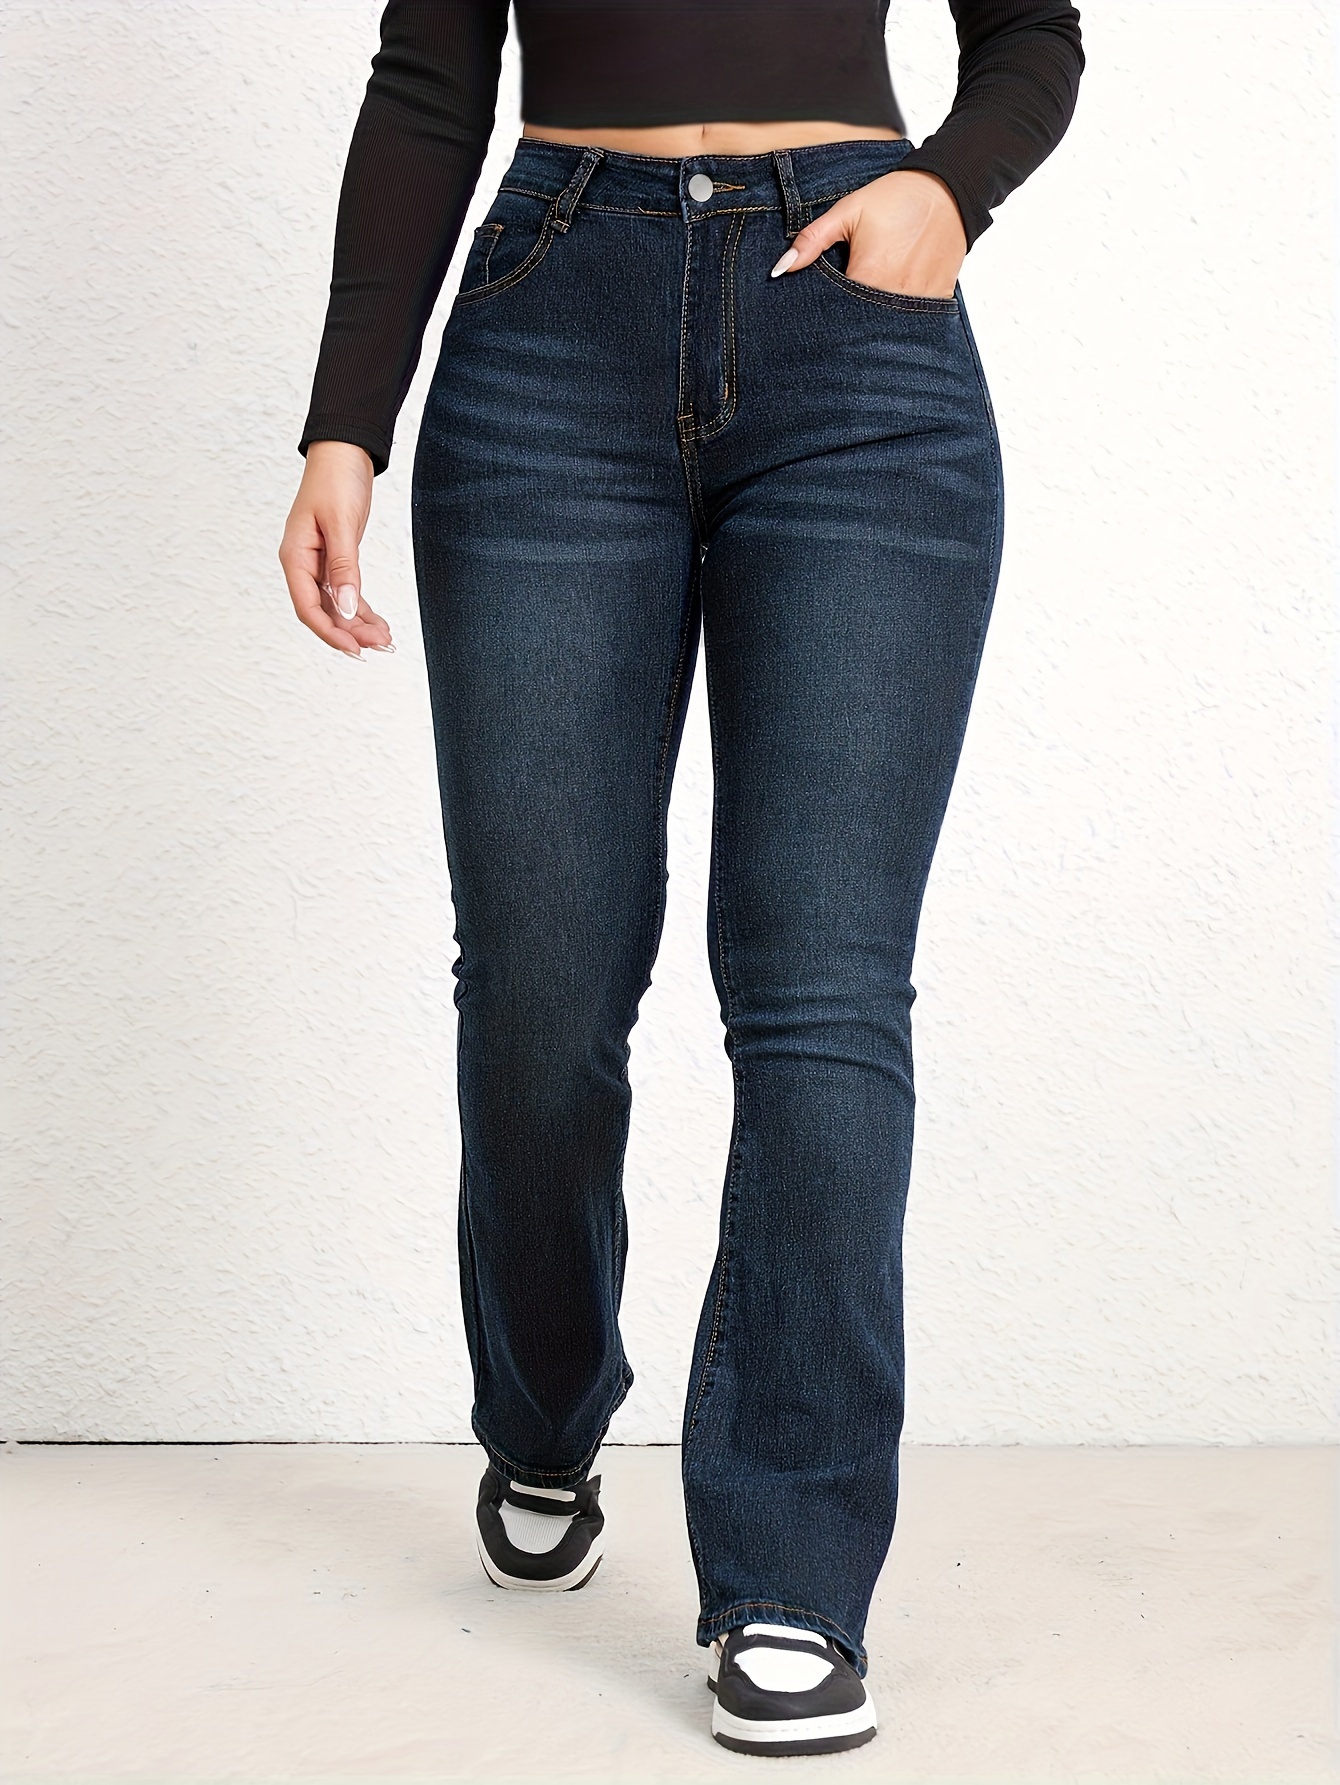 Navy Blue Fashion Bell Bottom Jeans, High Stretch Slim Fit Slant Pockets  Bell Bottom Jeans, Women's Denim Jeans & Clothing